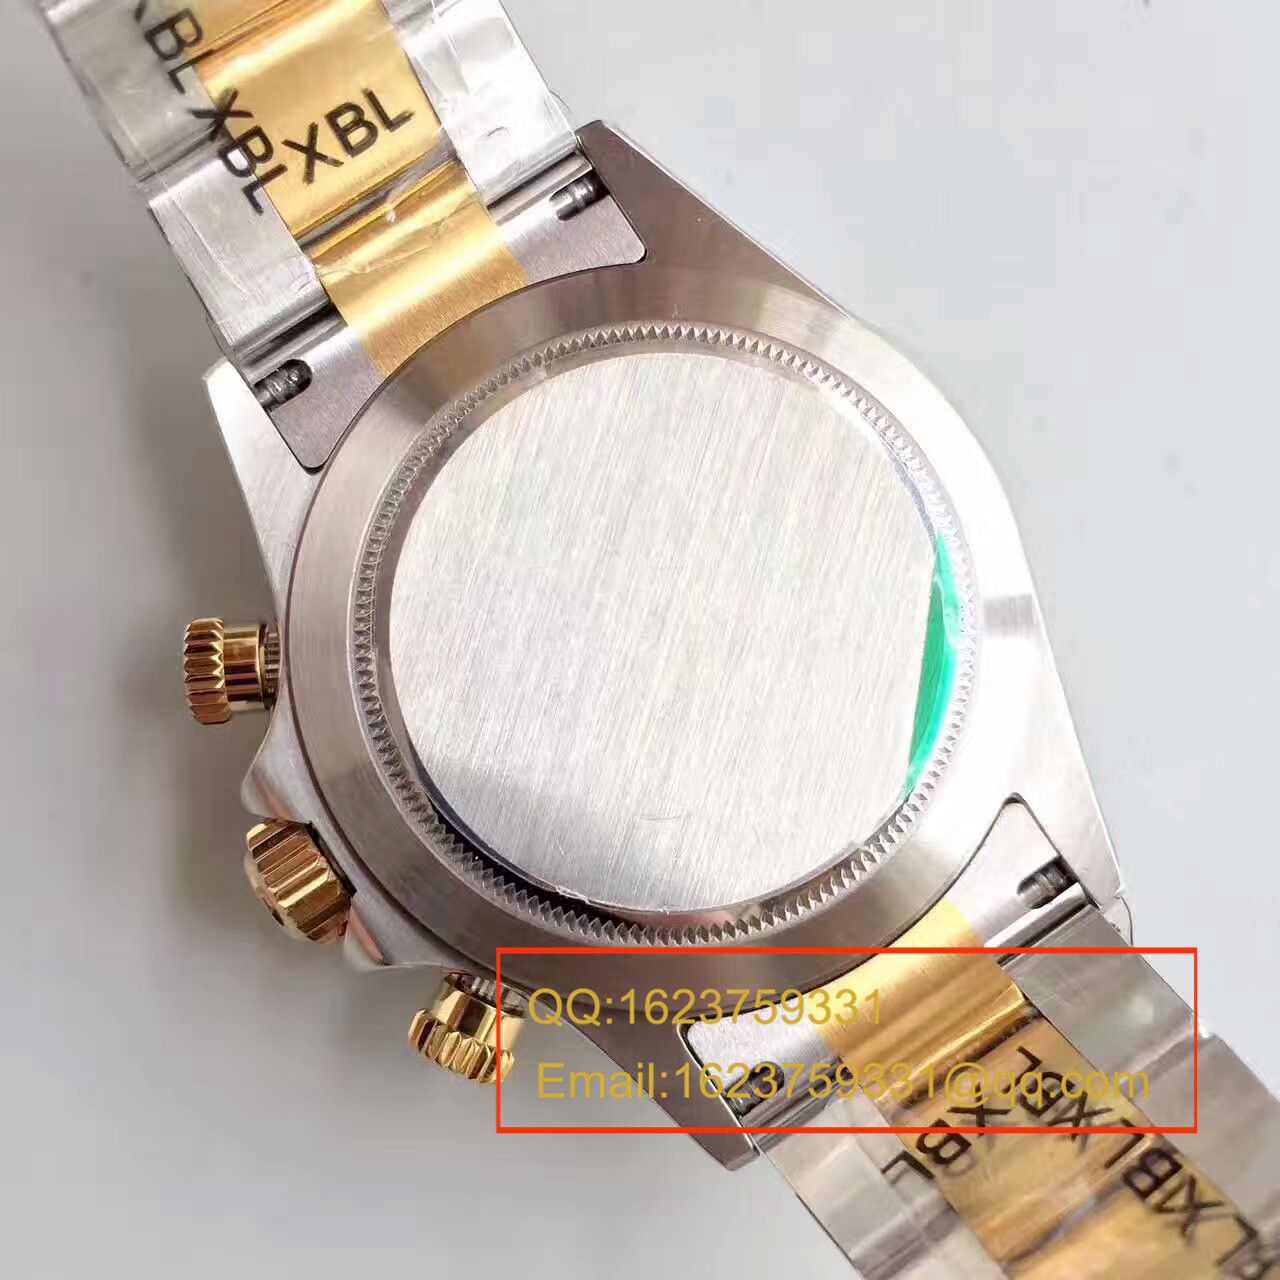 【JF厂1:1高仿手表】劳力士宇宙计型迪通拿系列116508白盘腕表 